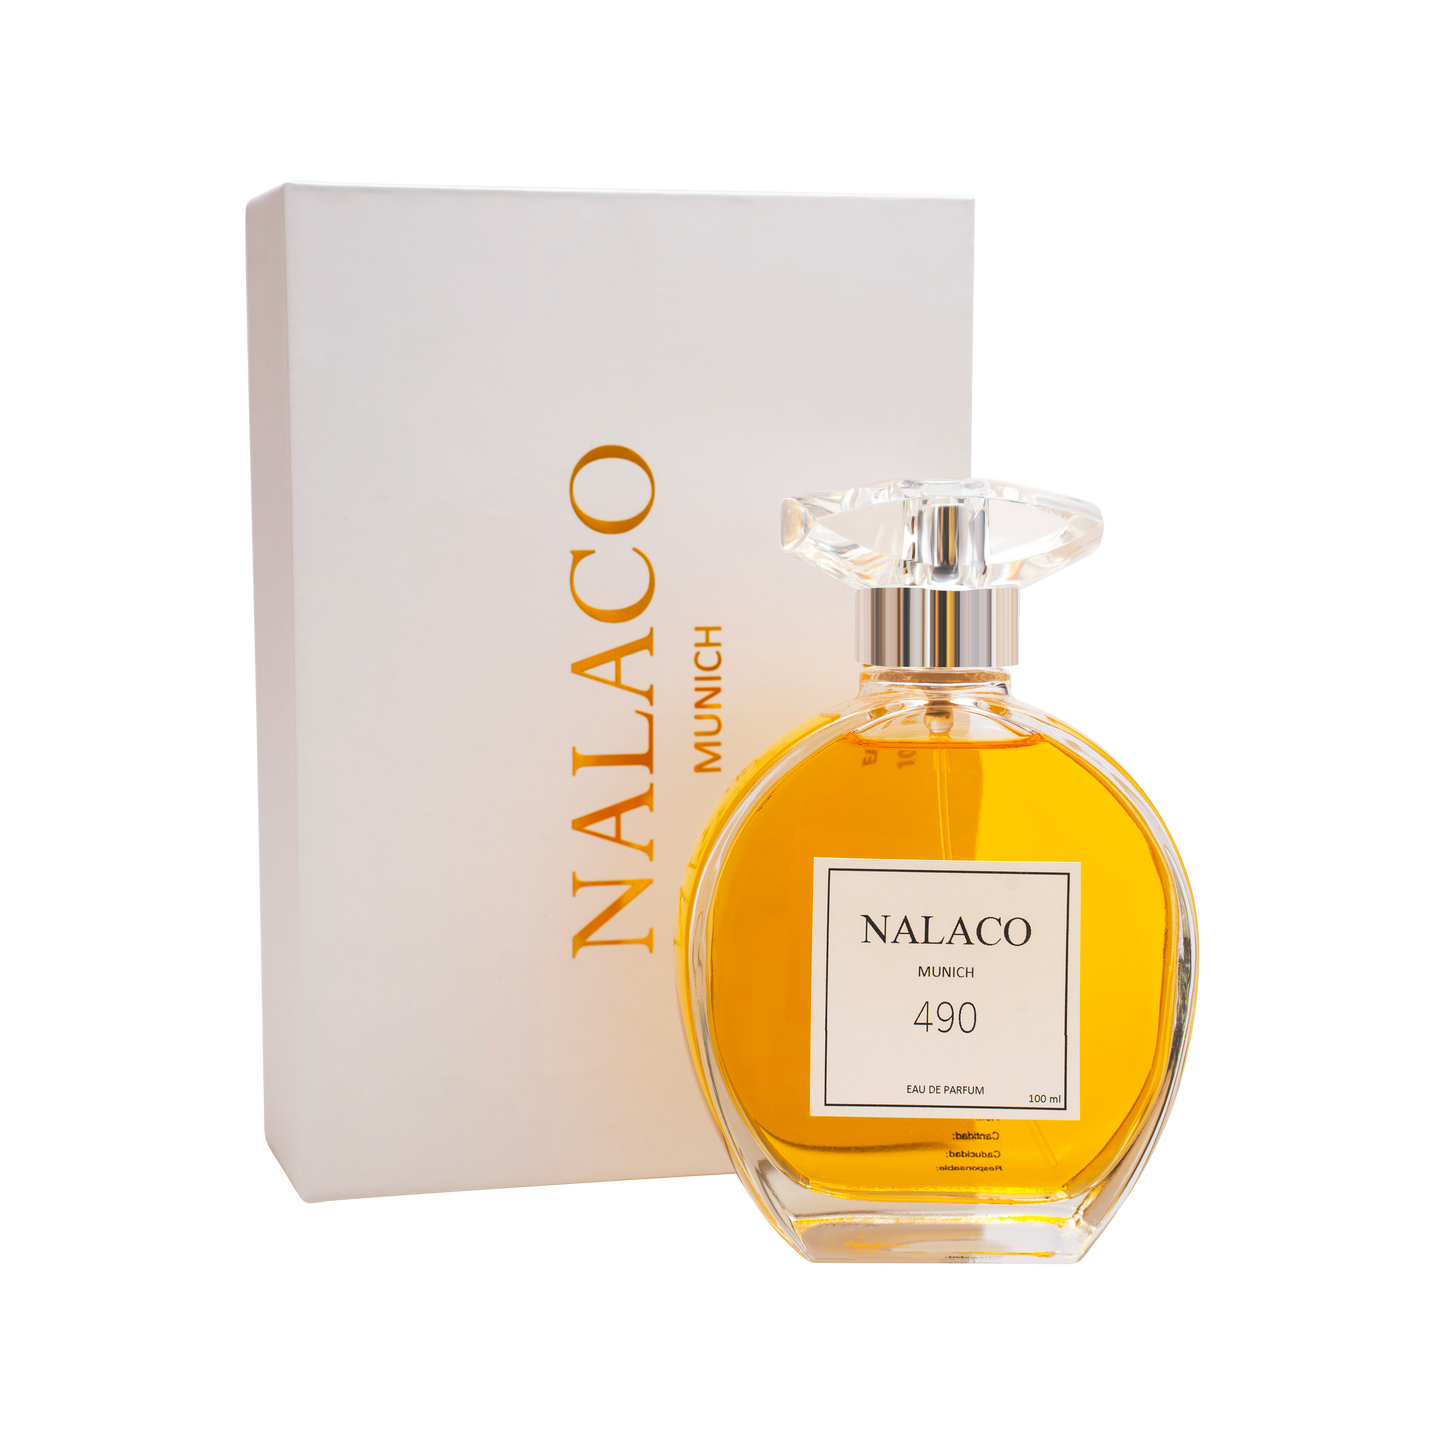 Nalaco No. 490 inspired by Chanel Allure Sensuelle